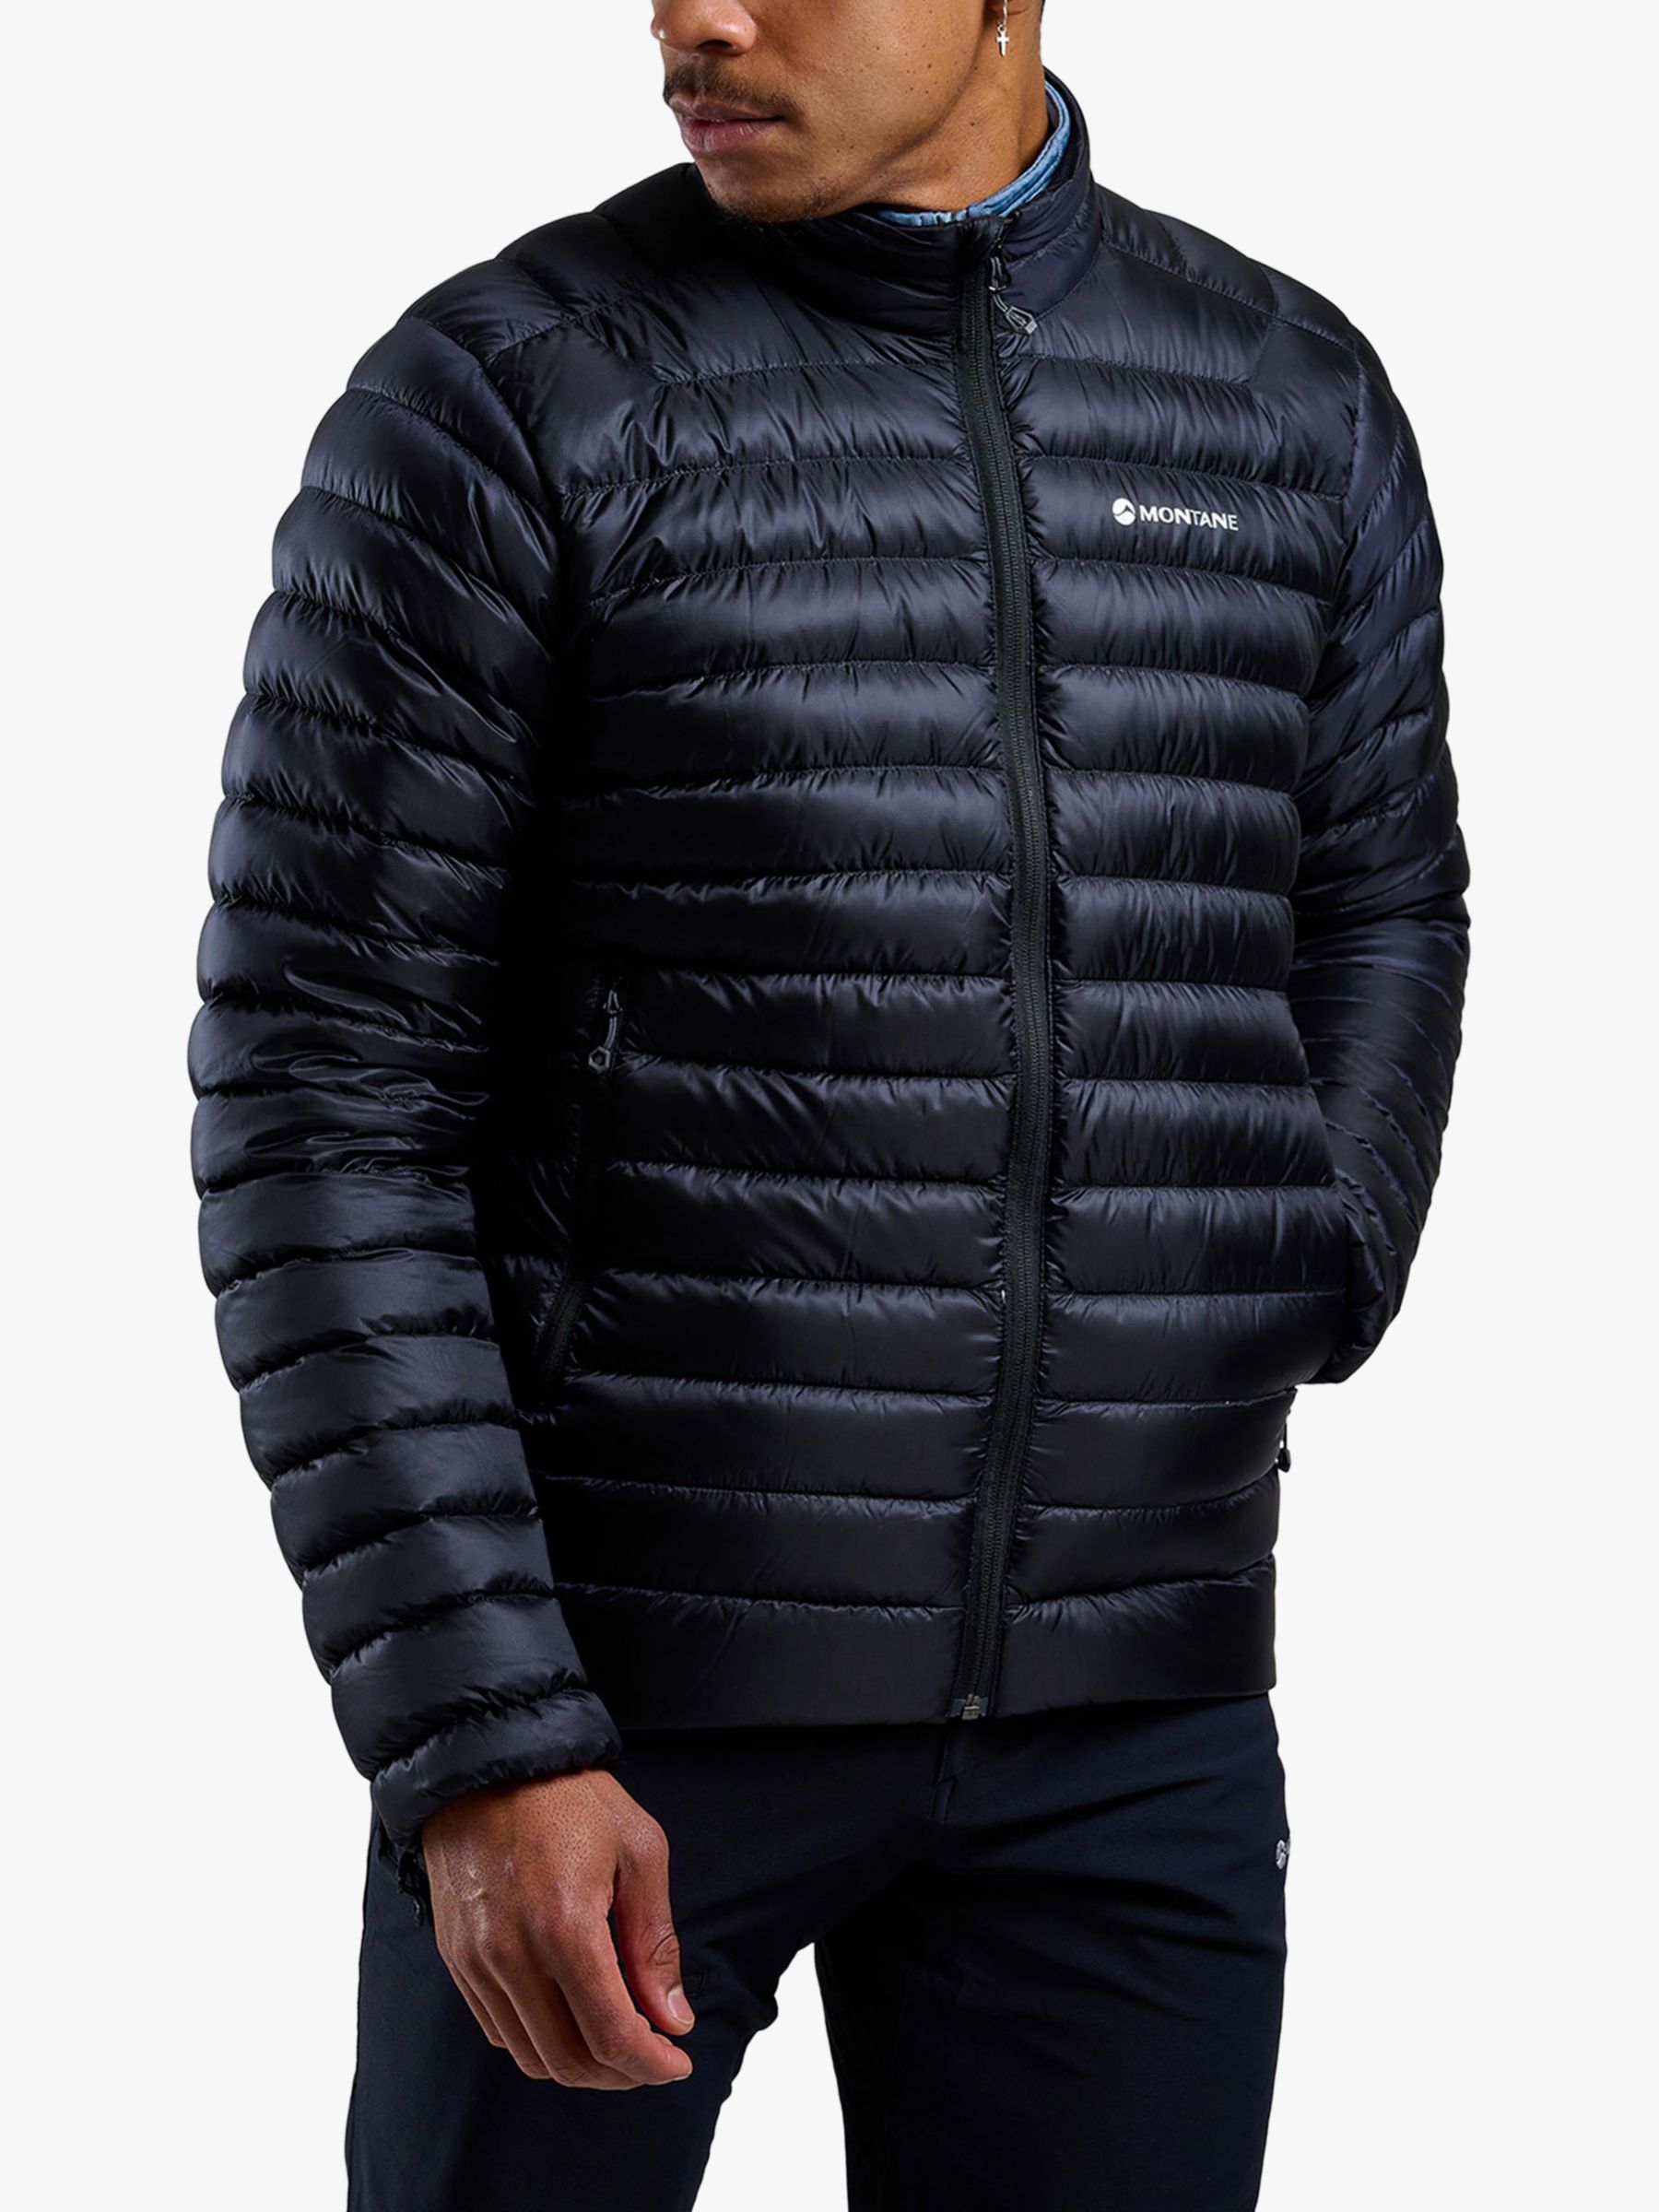 Montane Anti-Freeze Padded Jacket, Black, M